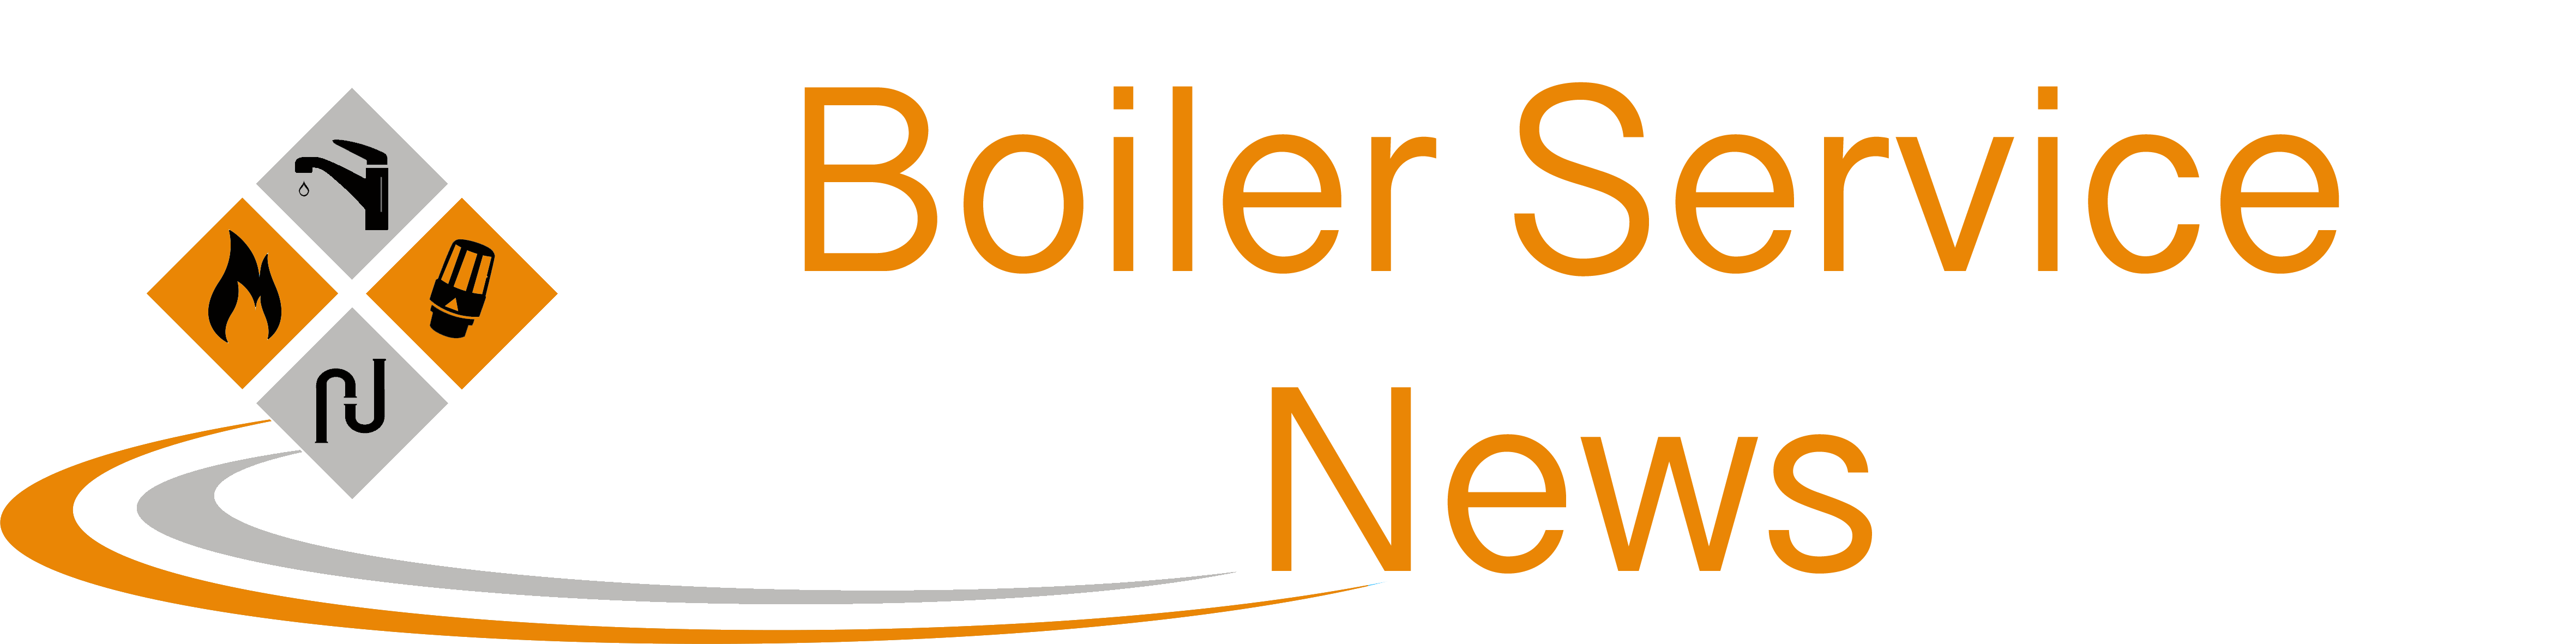 Boiler Service News